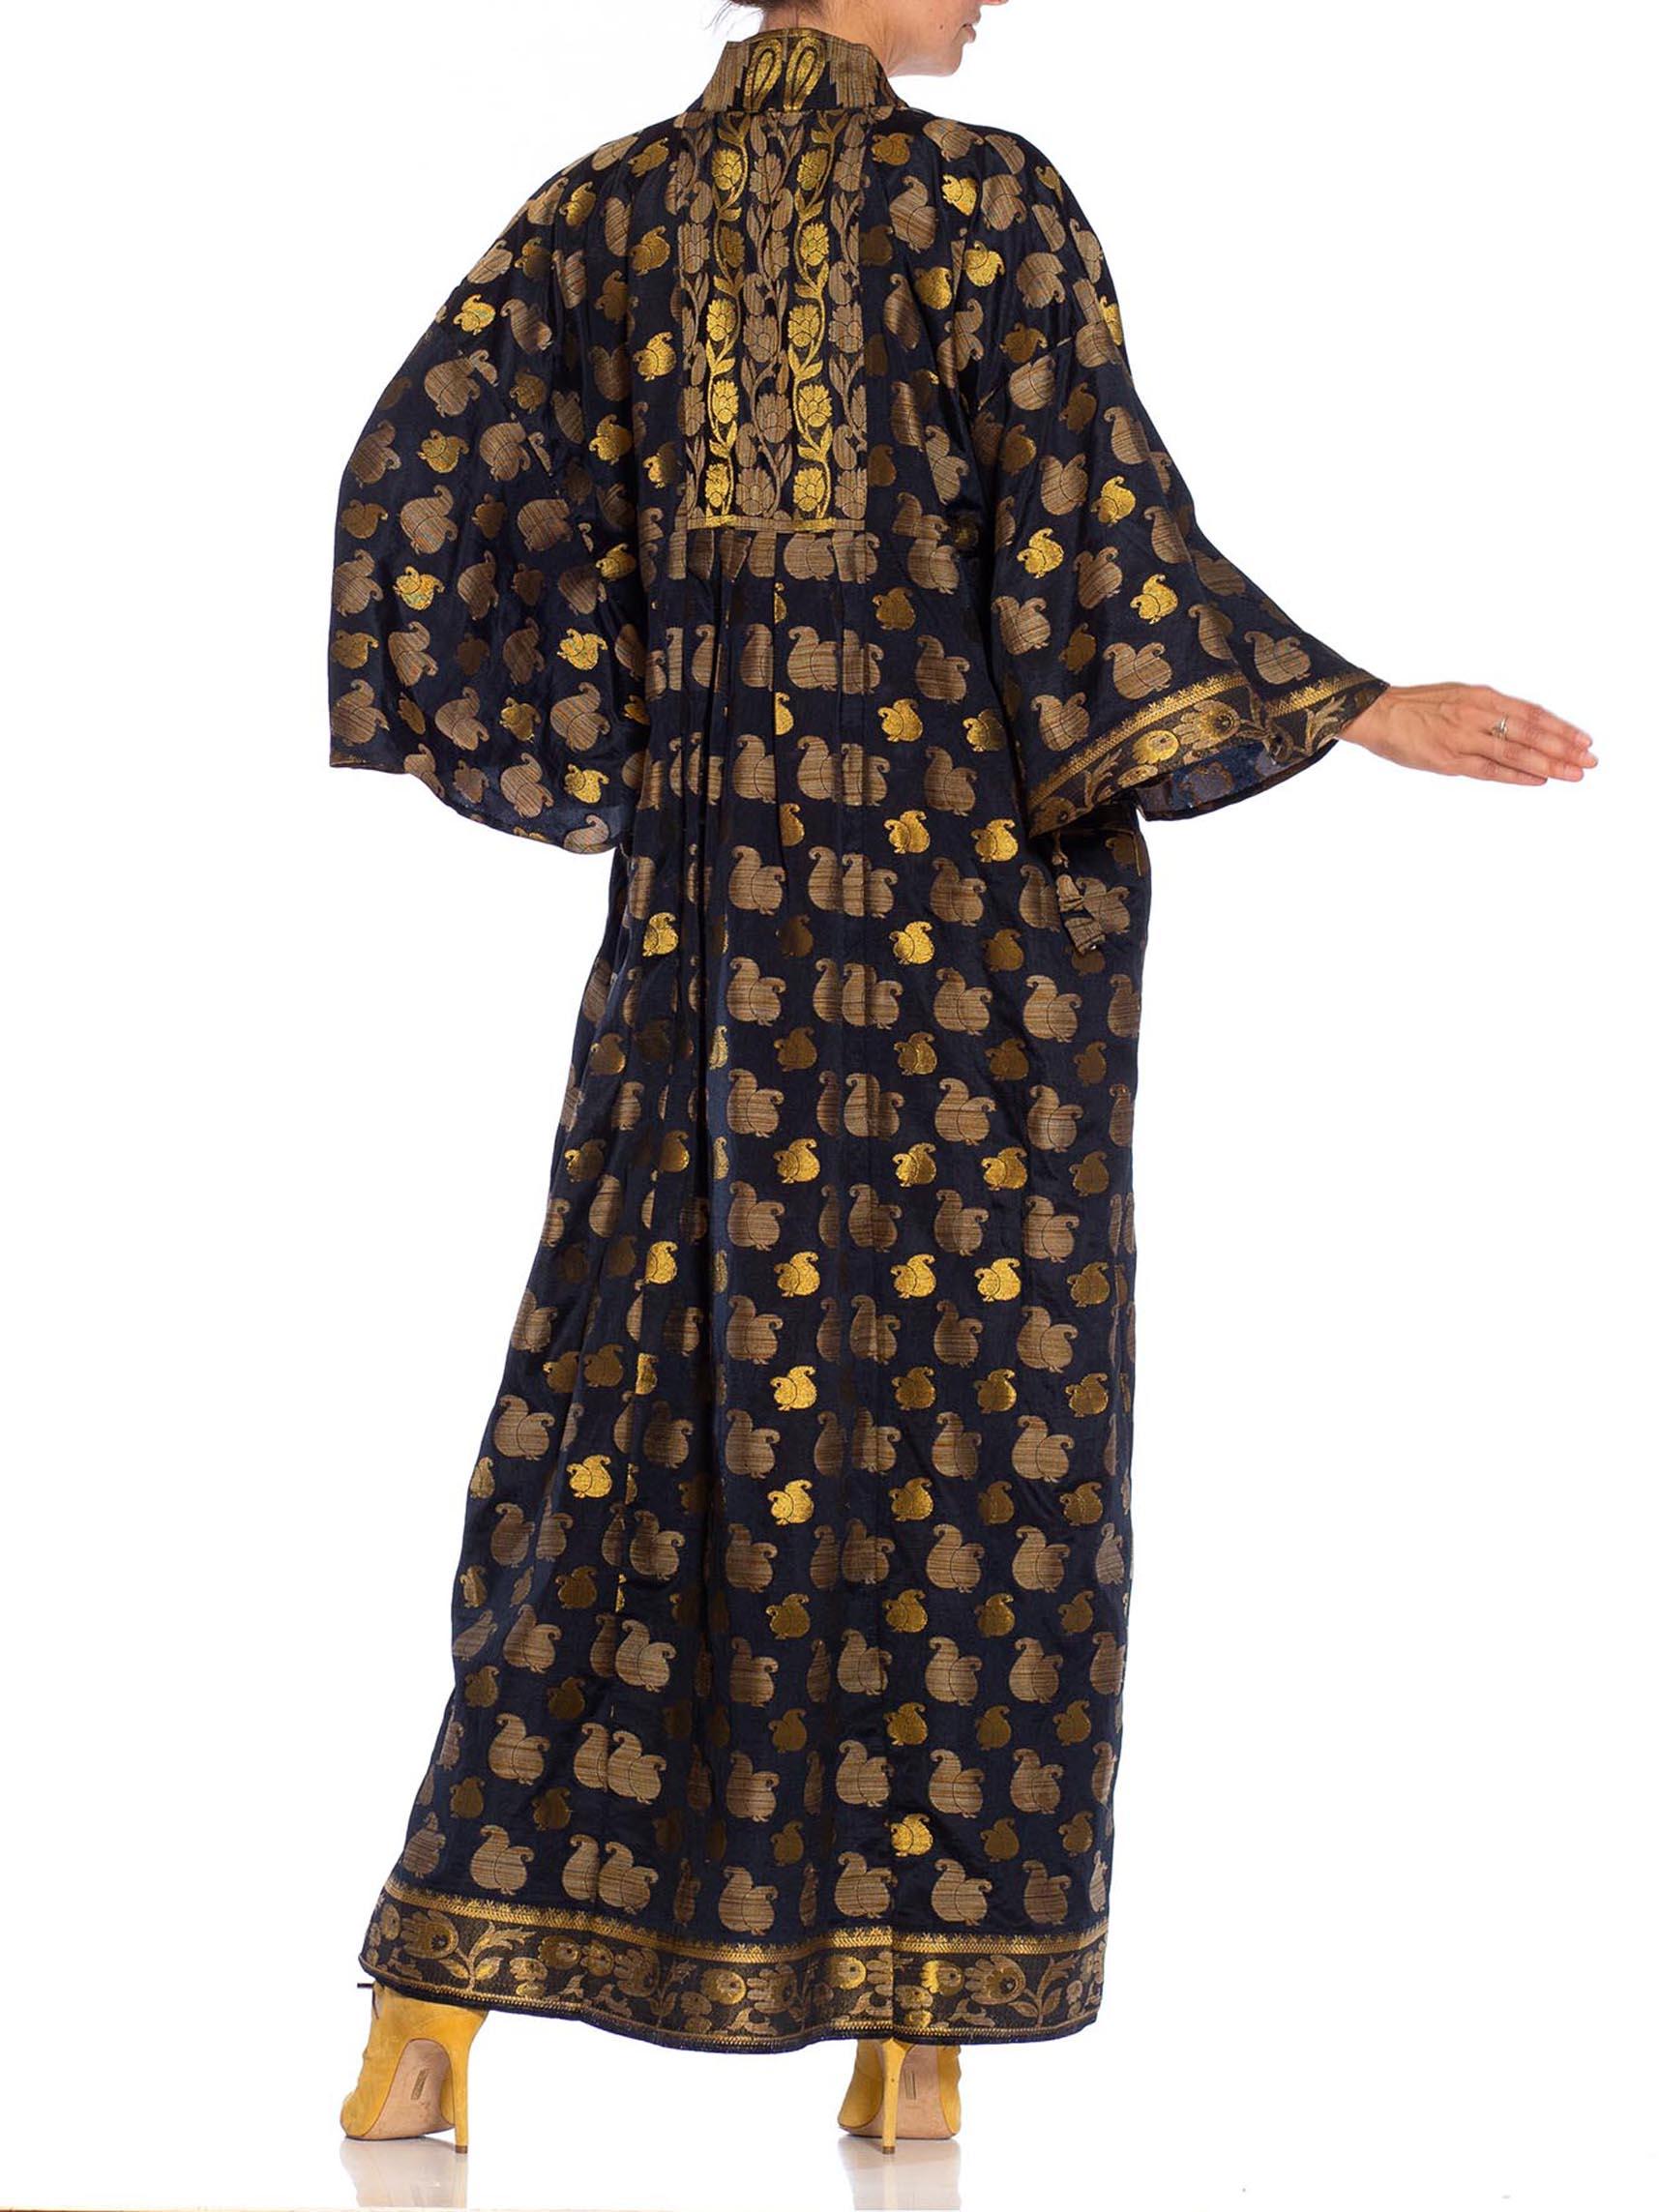 MORPHEW COLLECTION Black & Gold Metallic Silk Kaftan Made From Vintage Saris For Sale 2